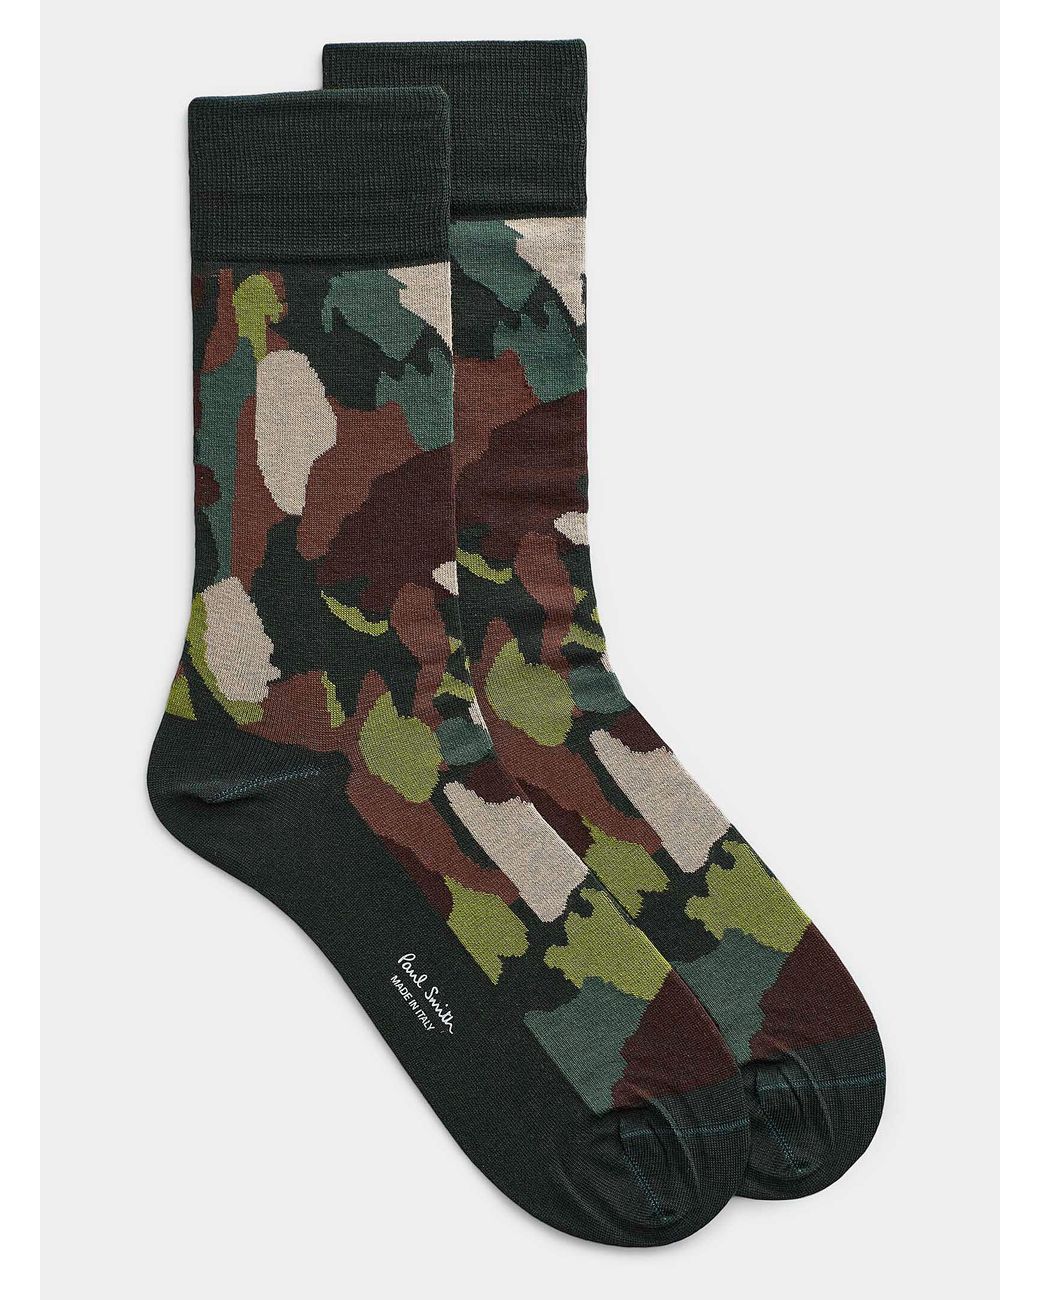 Army green Men Camo Socks Fashion Patterned Crew Socks Comfort Cotton Socks 